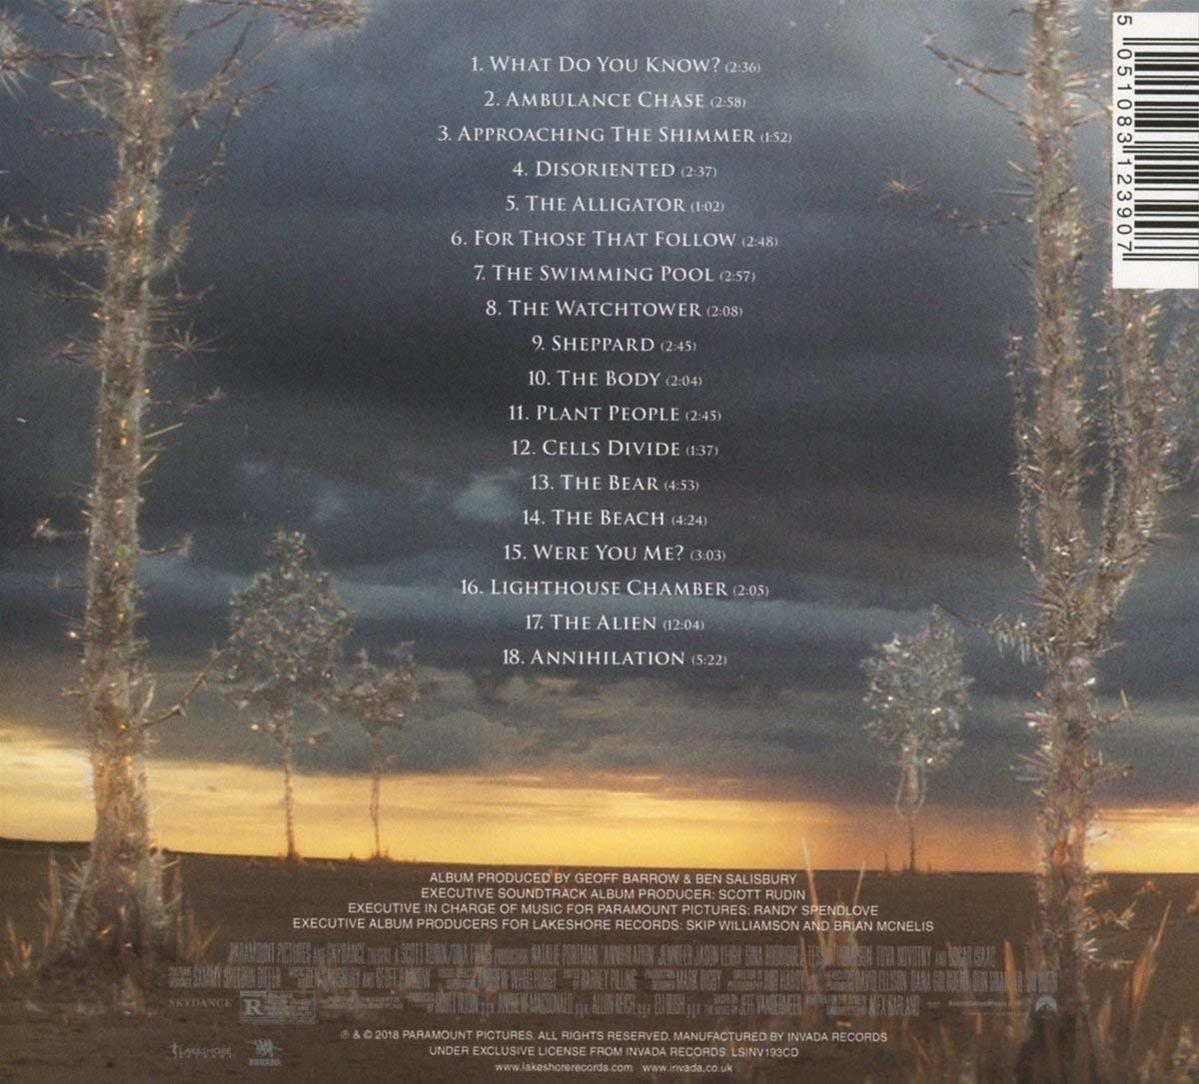 Ben Salisbury, Geoff Barrow - Annihilation - (CD) (OST)